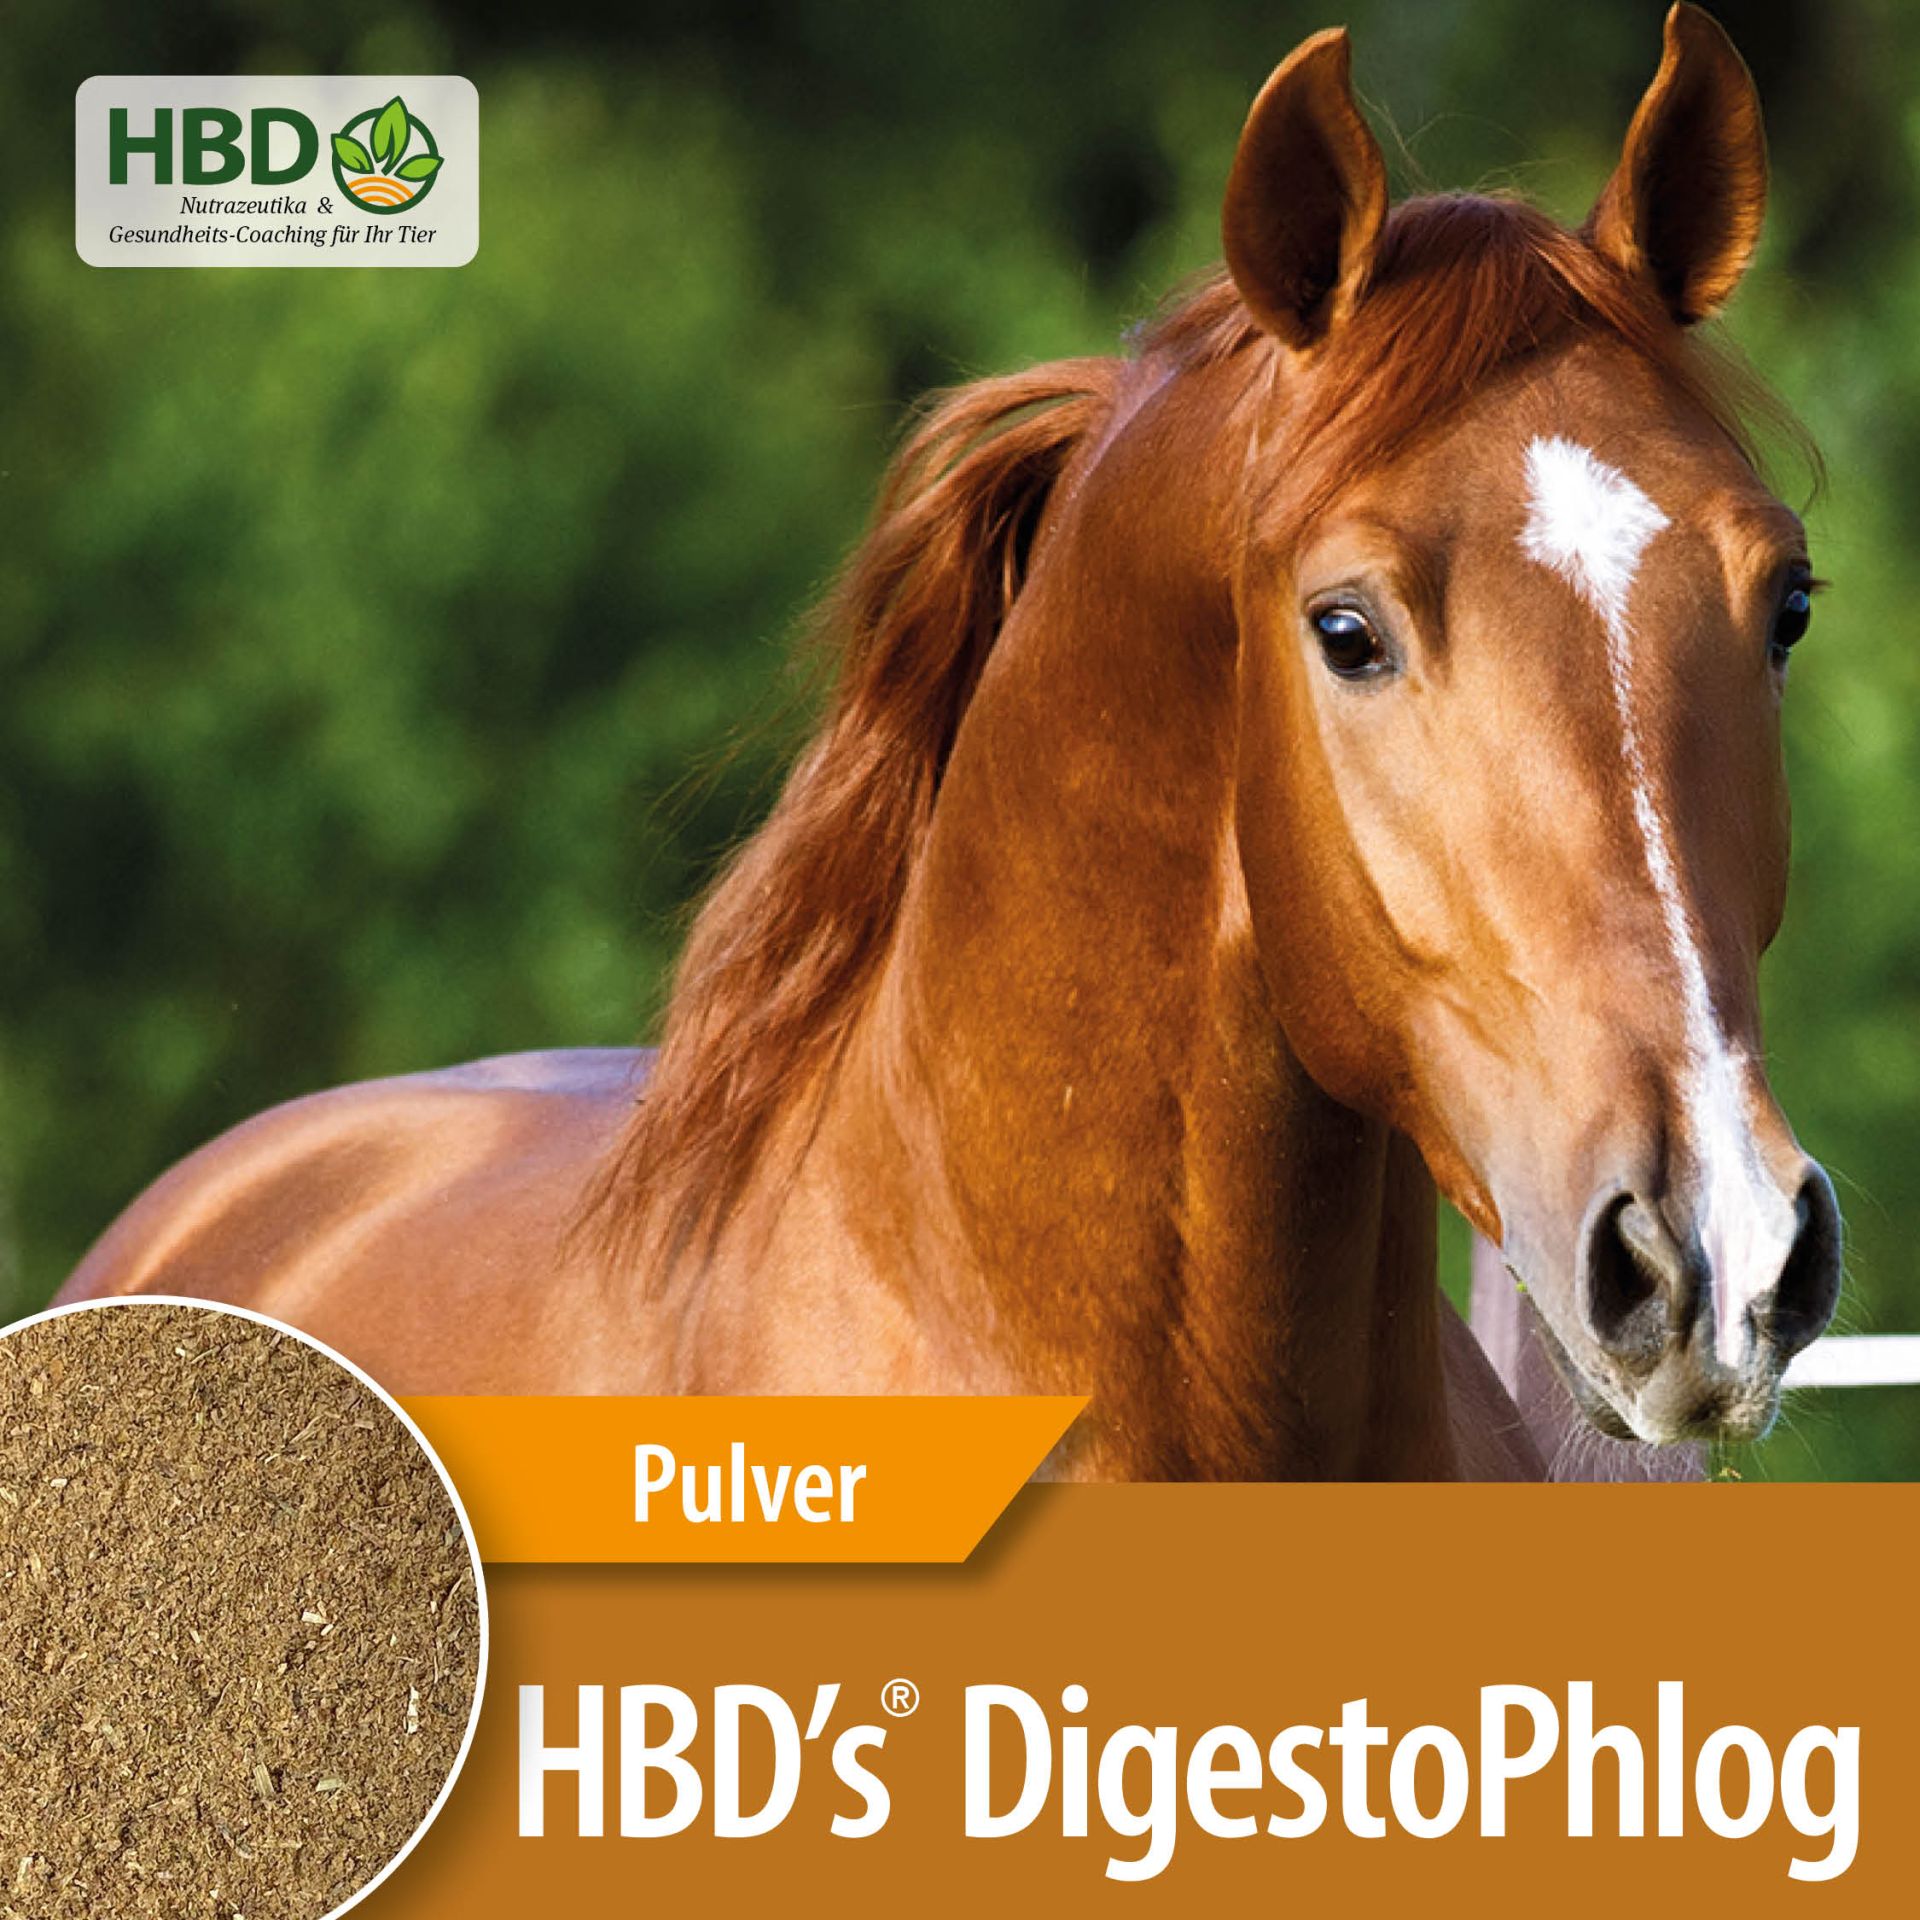 HBD-Agrar - Allergie & Darm-Fit Paket #1 - HBD's® DigestoVit® + HBD's® DigestoPhlog